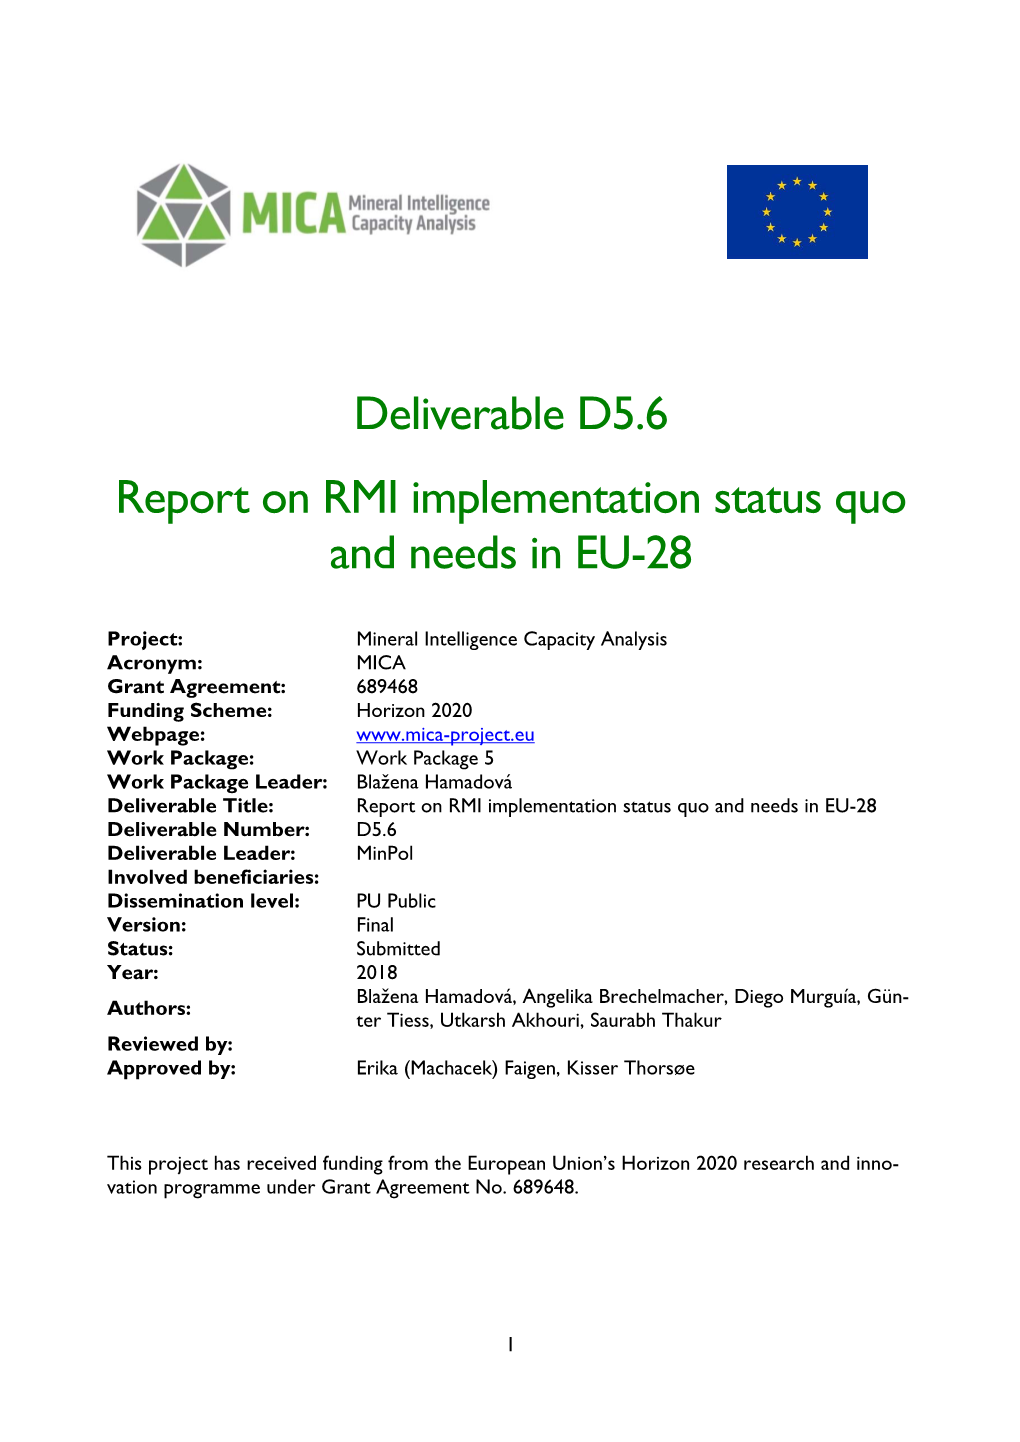 D5.6 RMI Implementation Status Quo and Needs in EU-28